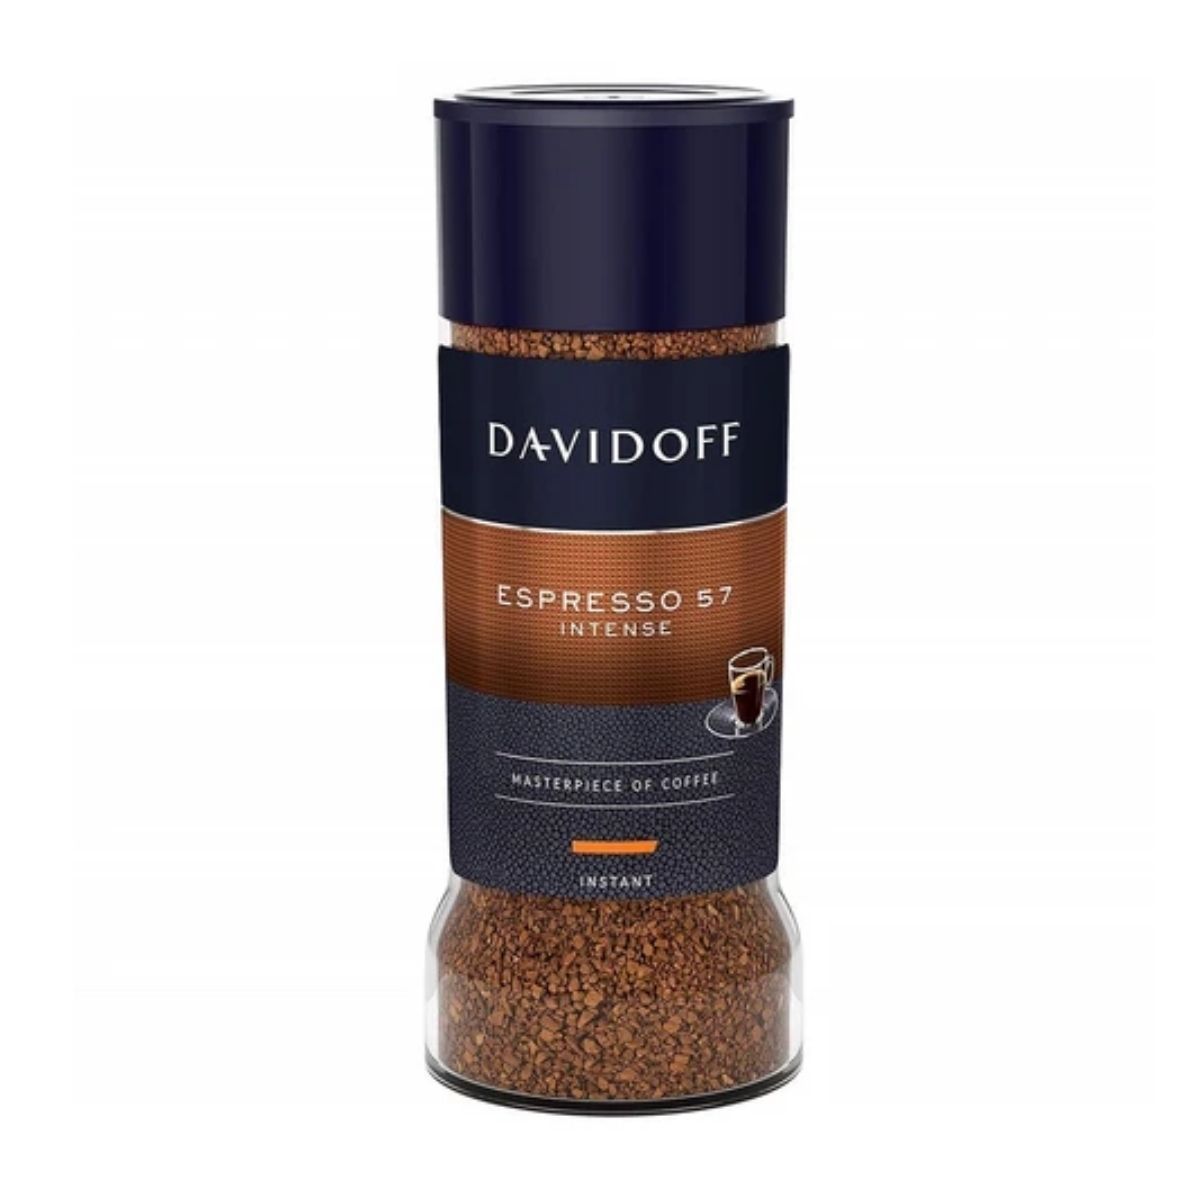 Davidoff Espresso 57 Intense Masterpeice of Coffee (100 g) Davidoff